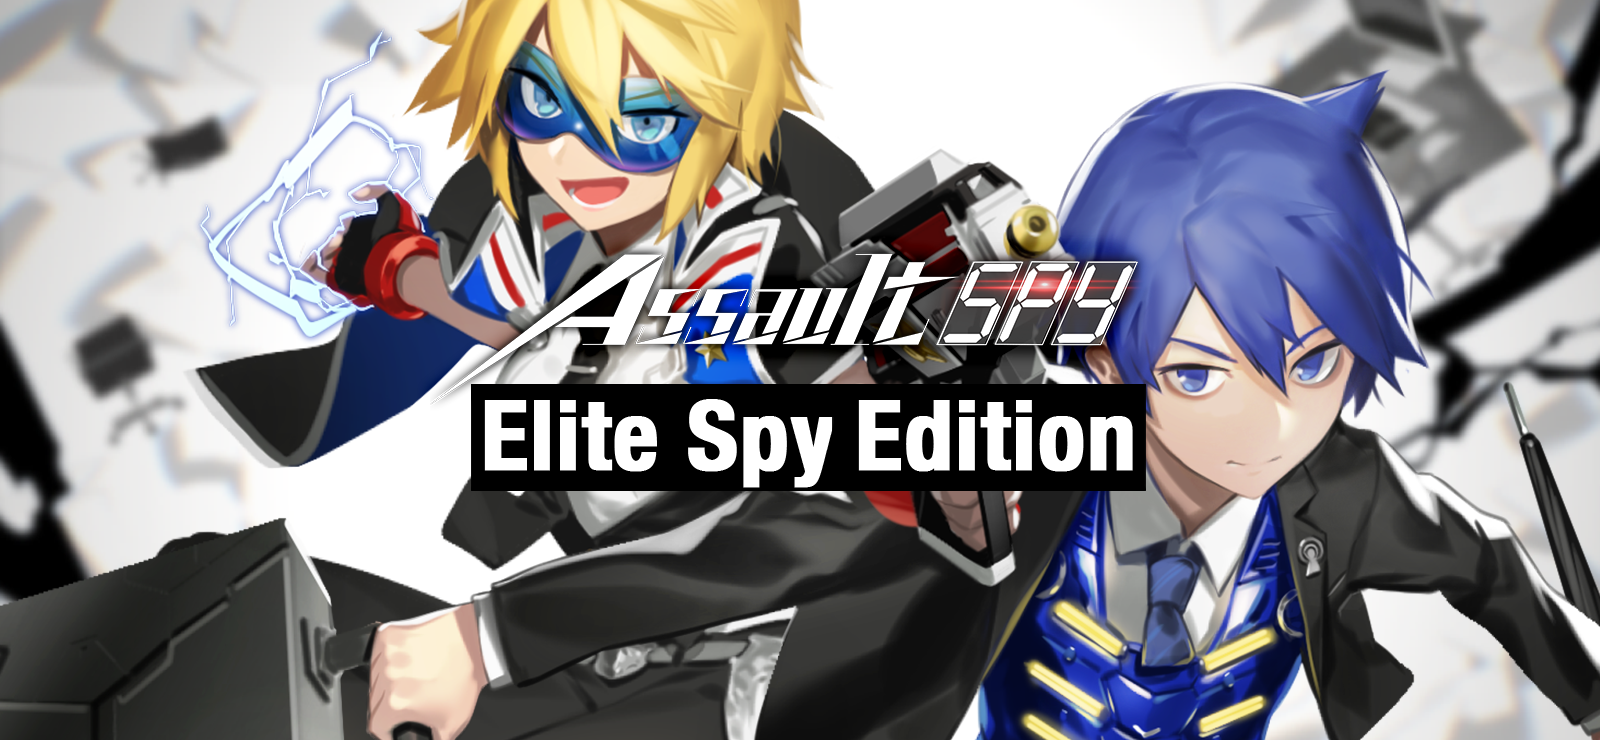 Assault Spy Elite Spy Edition